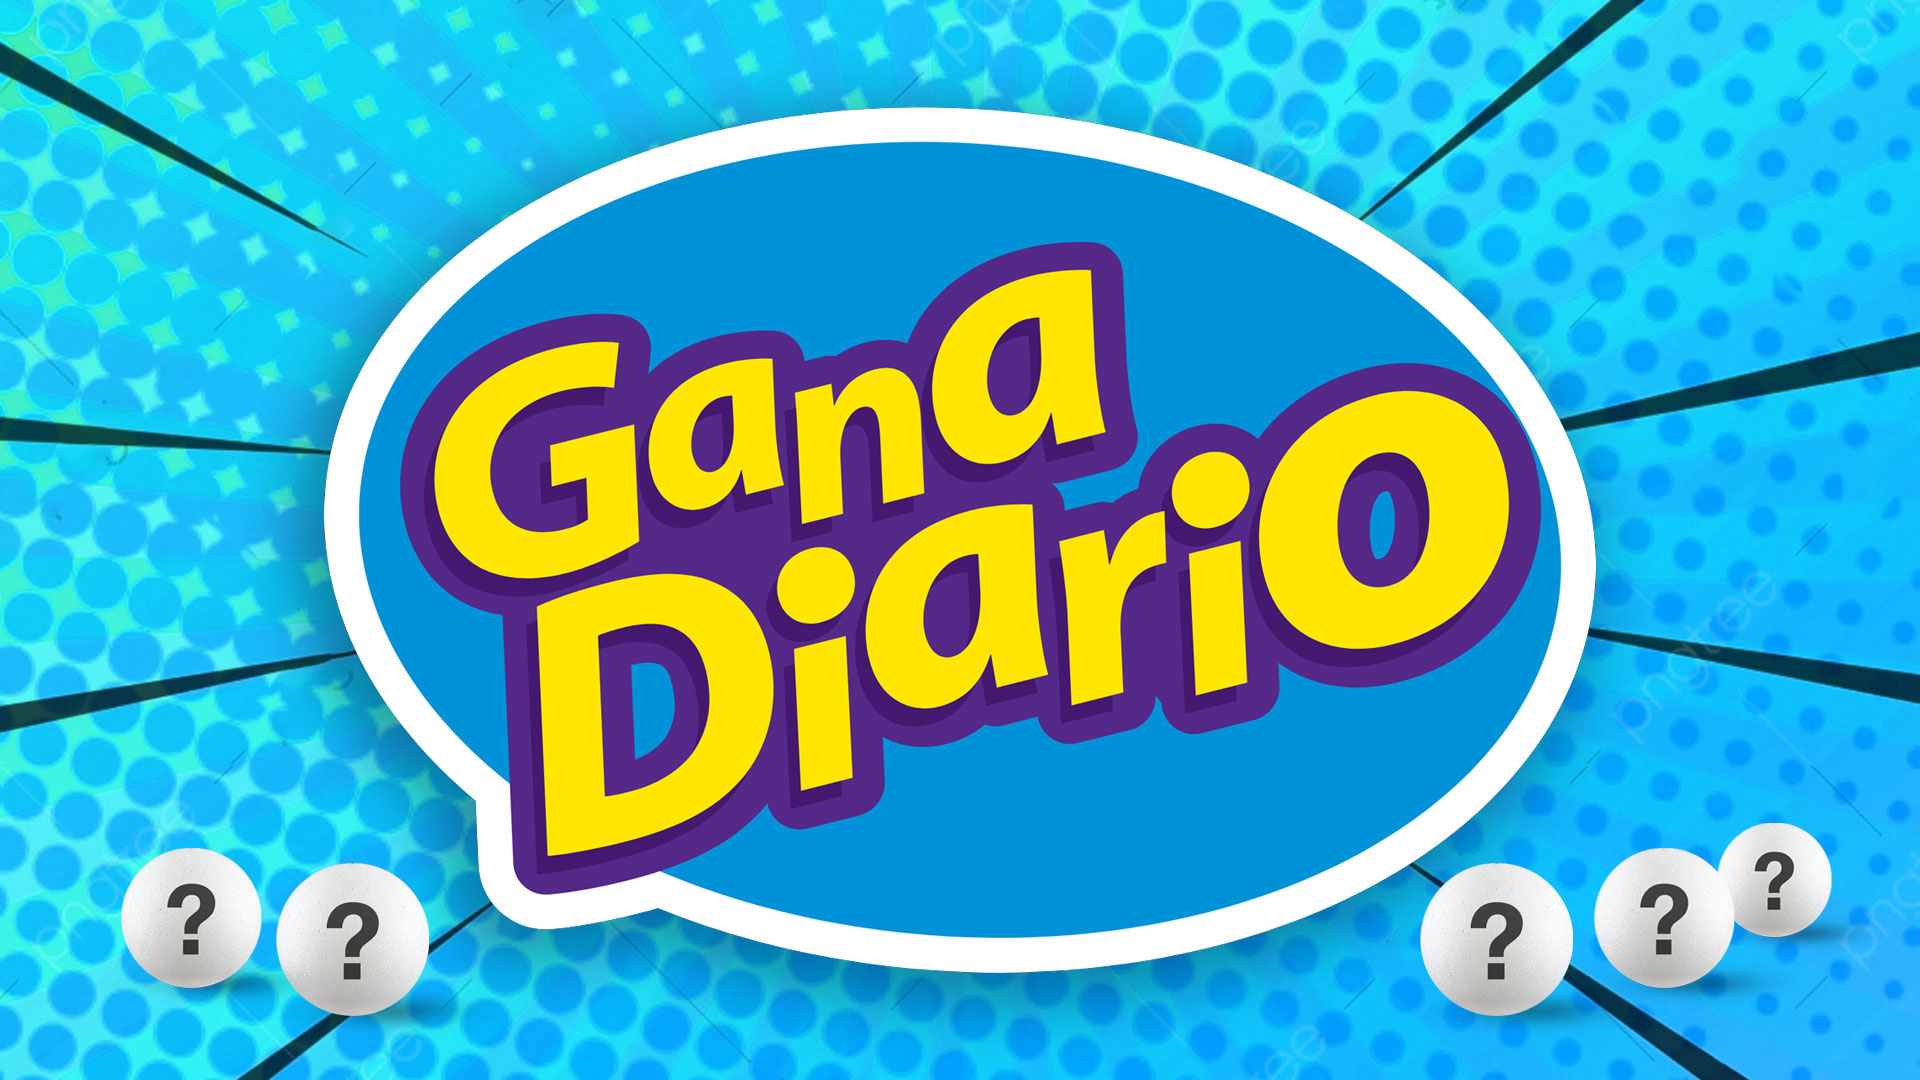 Gana Diario realiza un sorteo diario, de lunes a domingo (Infobae/Jovani Pérez)